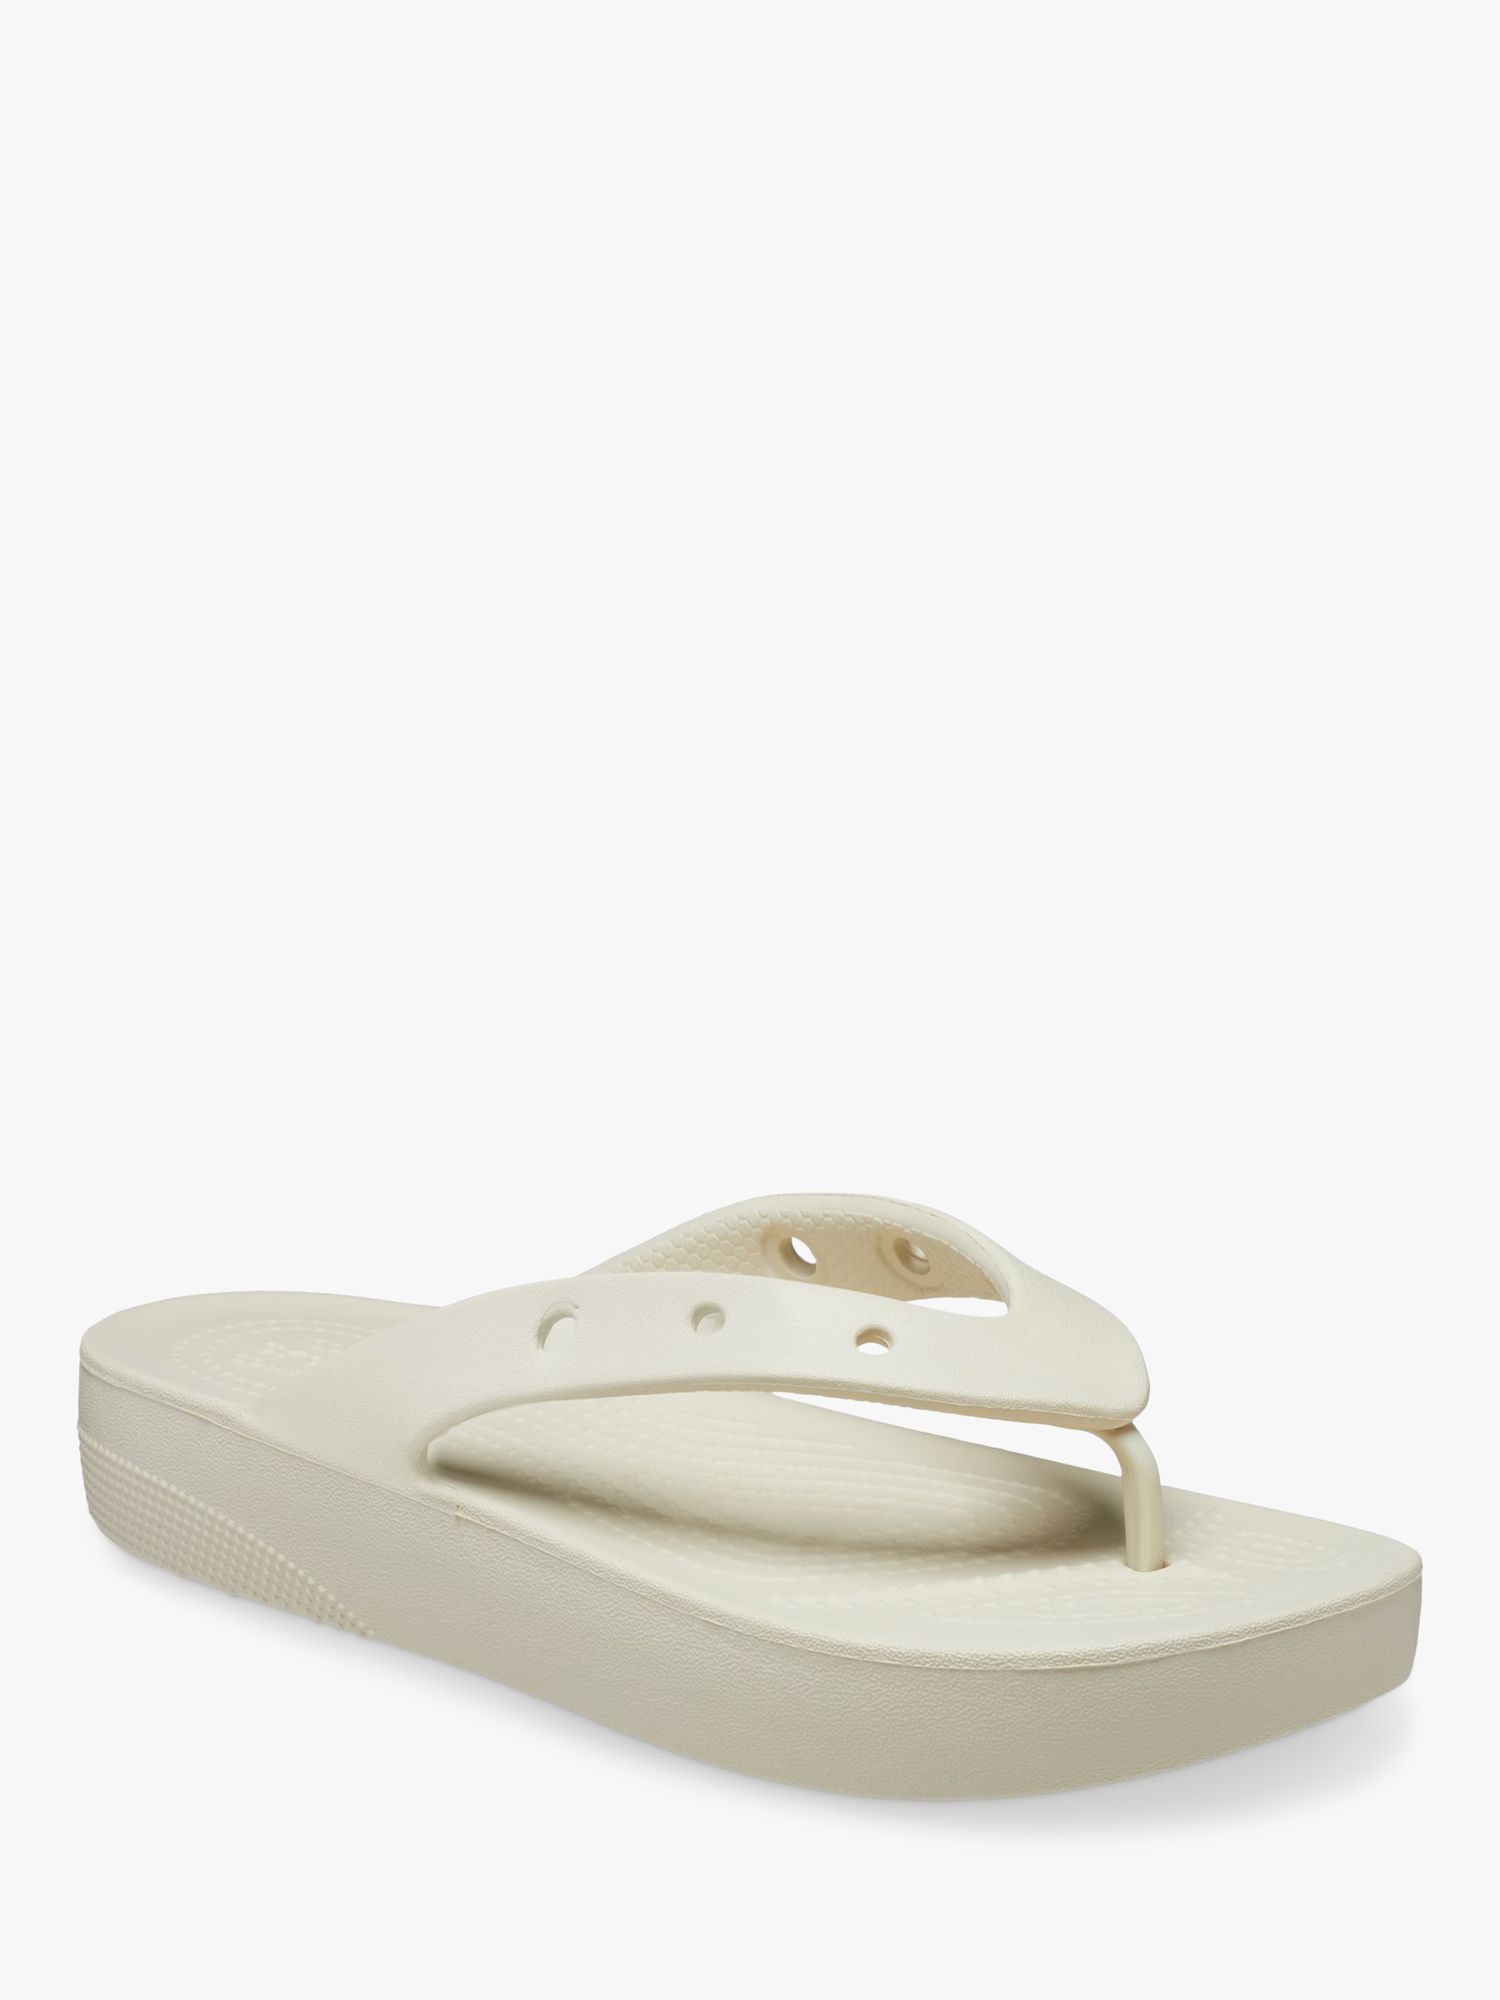 Crocs Platform Flip Flop, Off White, 4